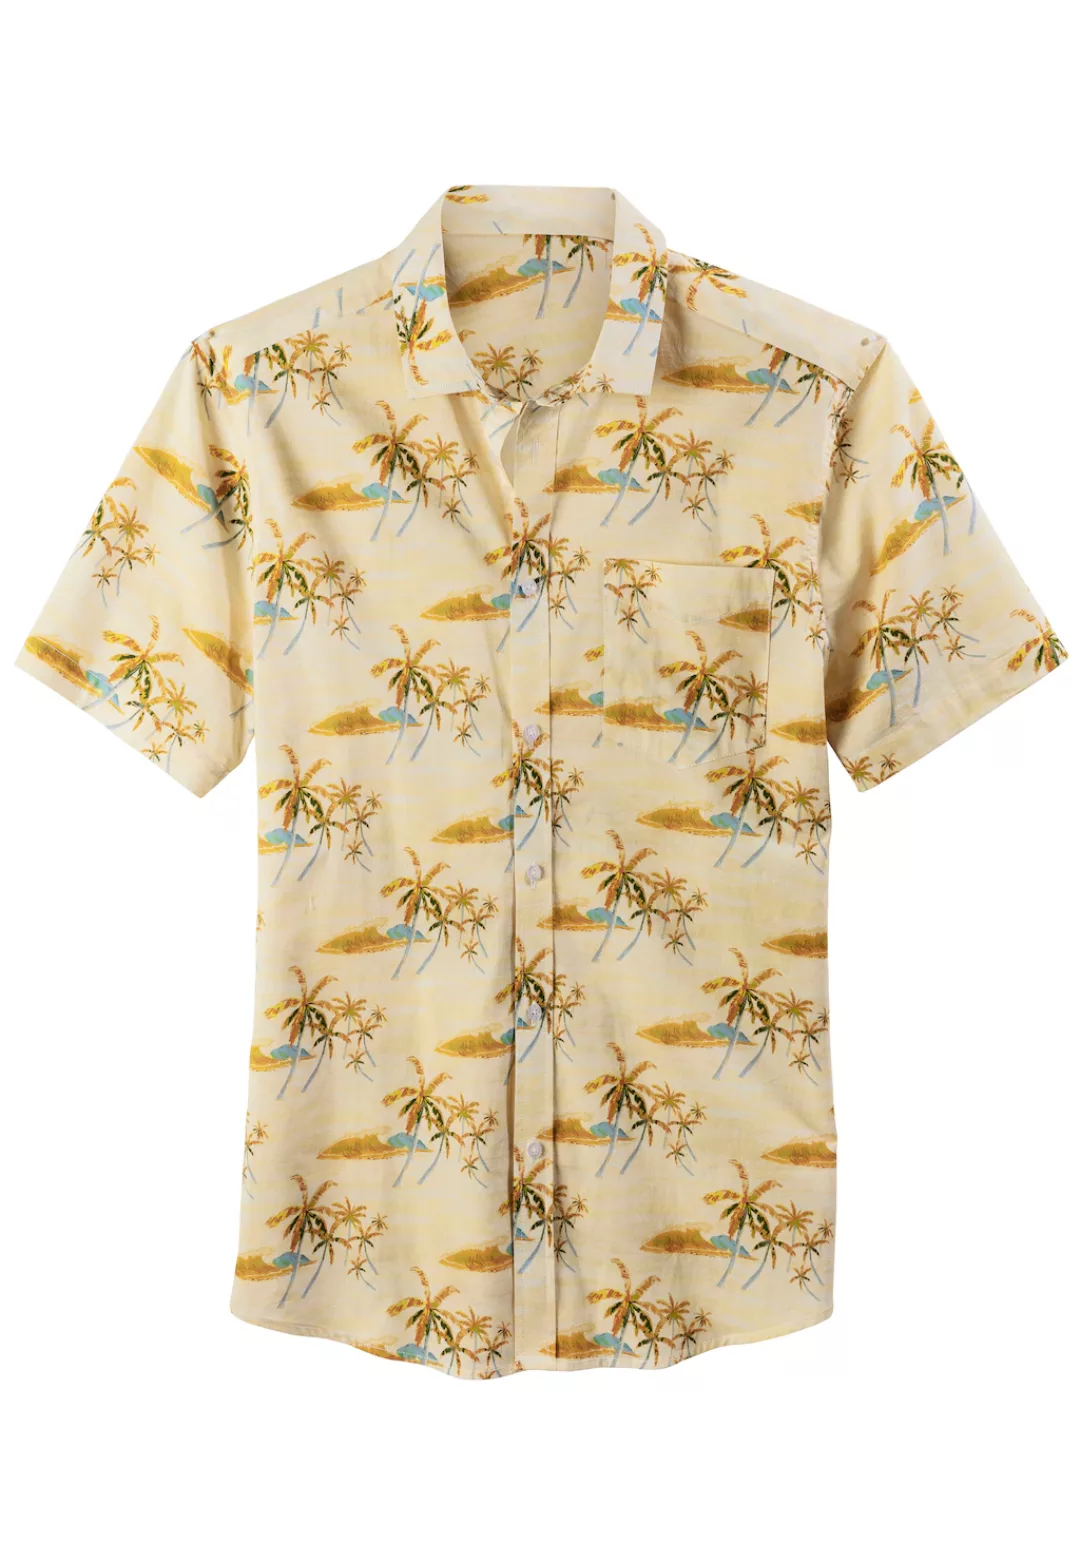 Beachtime Hawaiihemd mit coolem Palmenprint, Strandmode günstig online kaufen